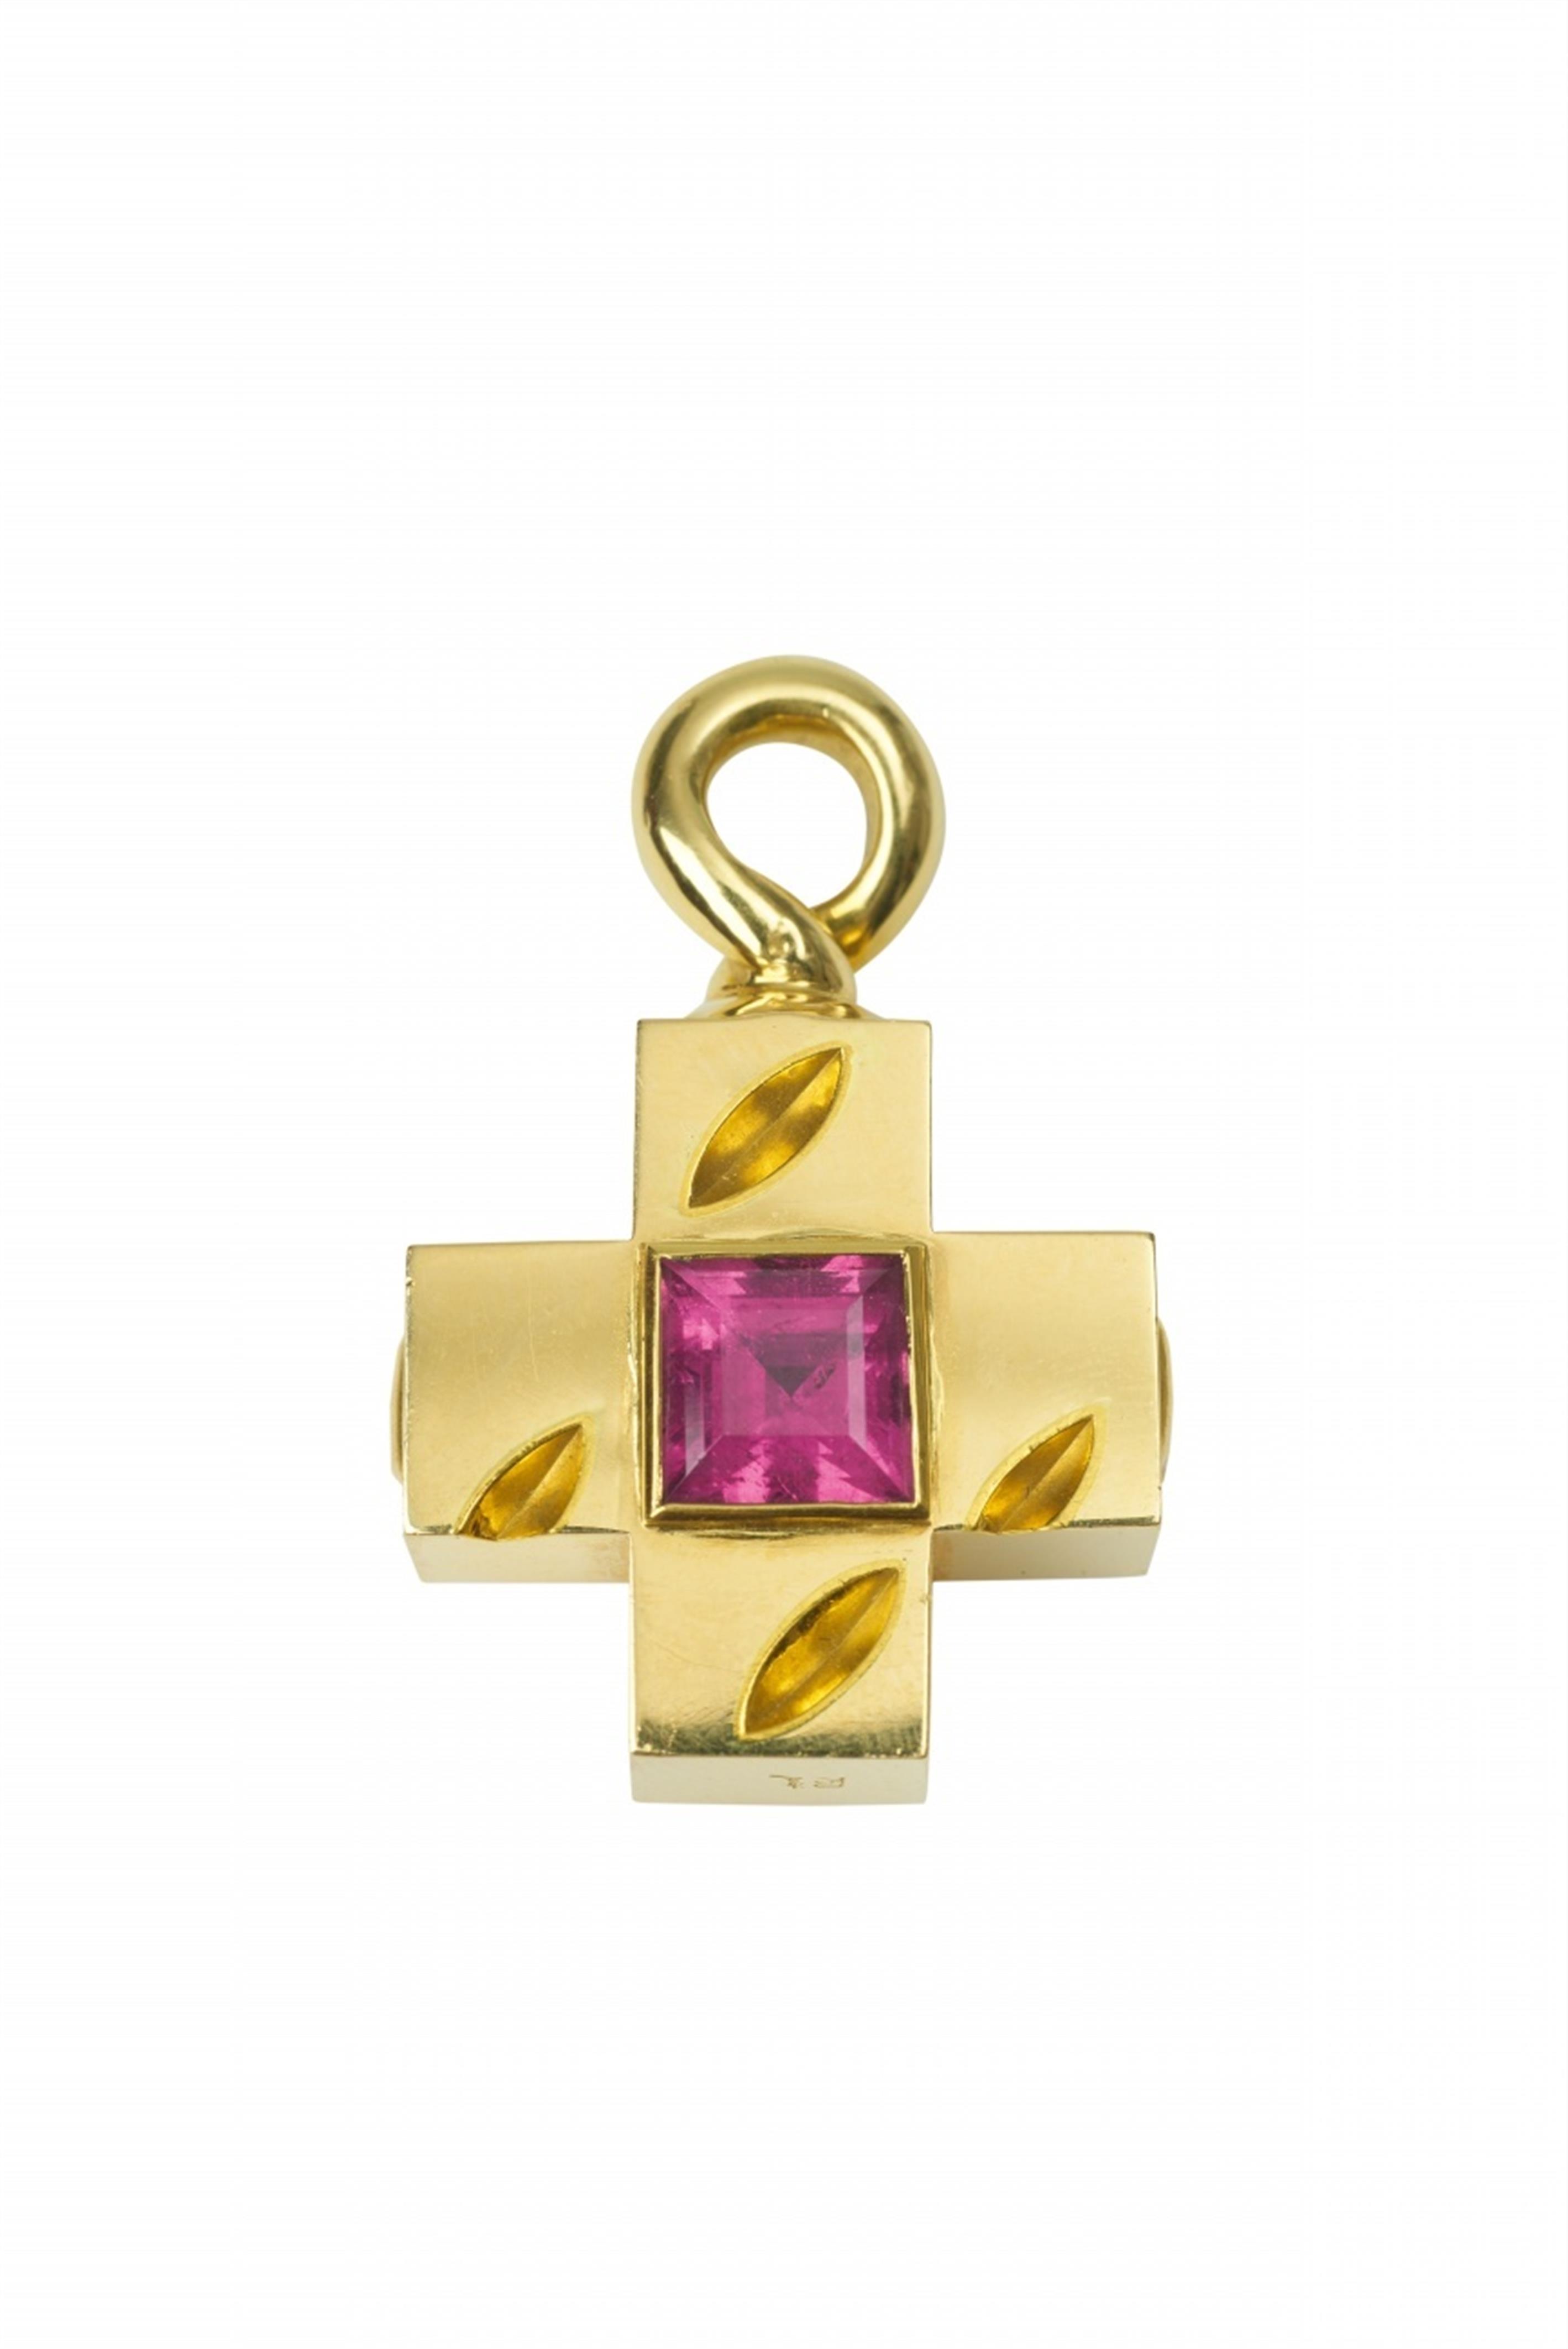 An 18k gold and tourmaline cross pendant - image-2